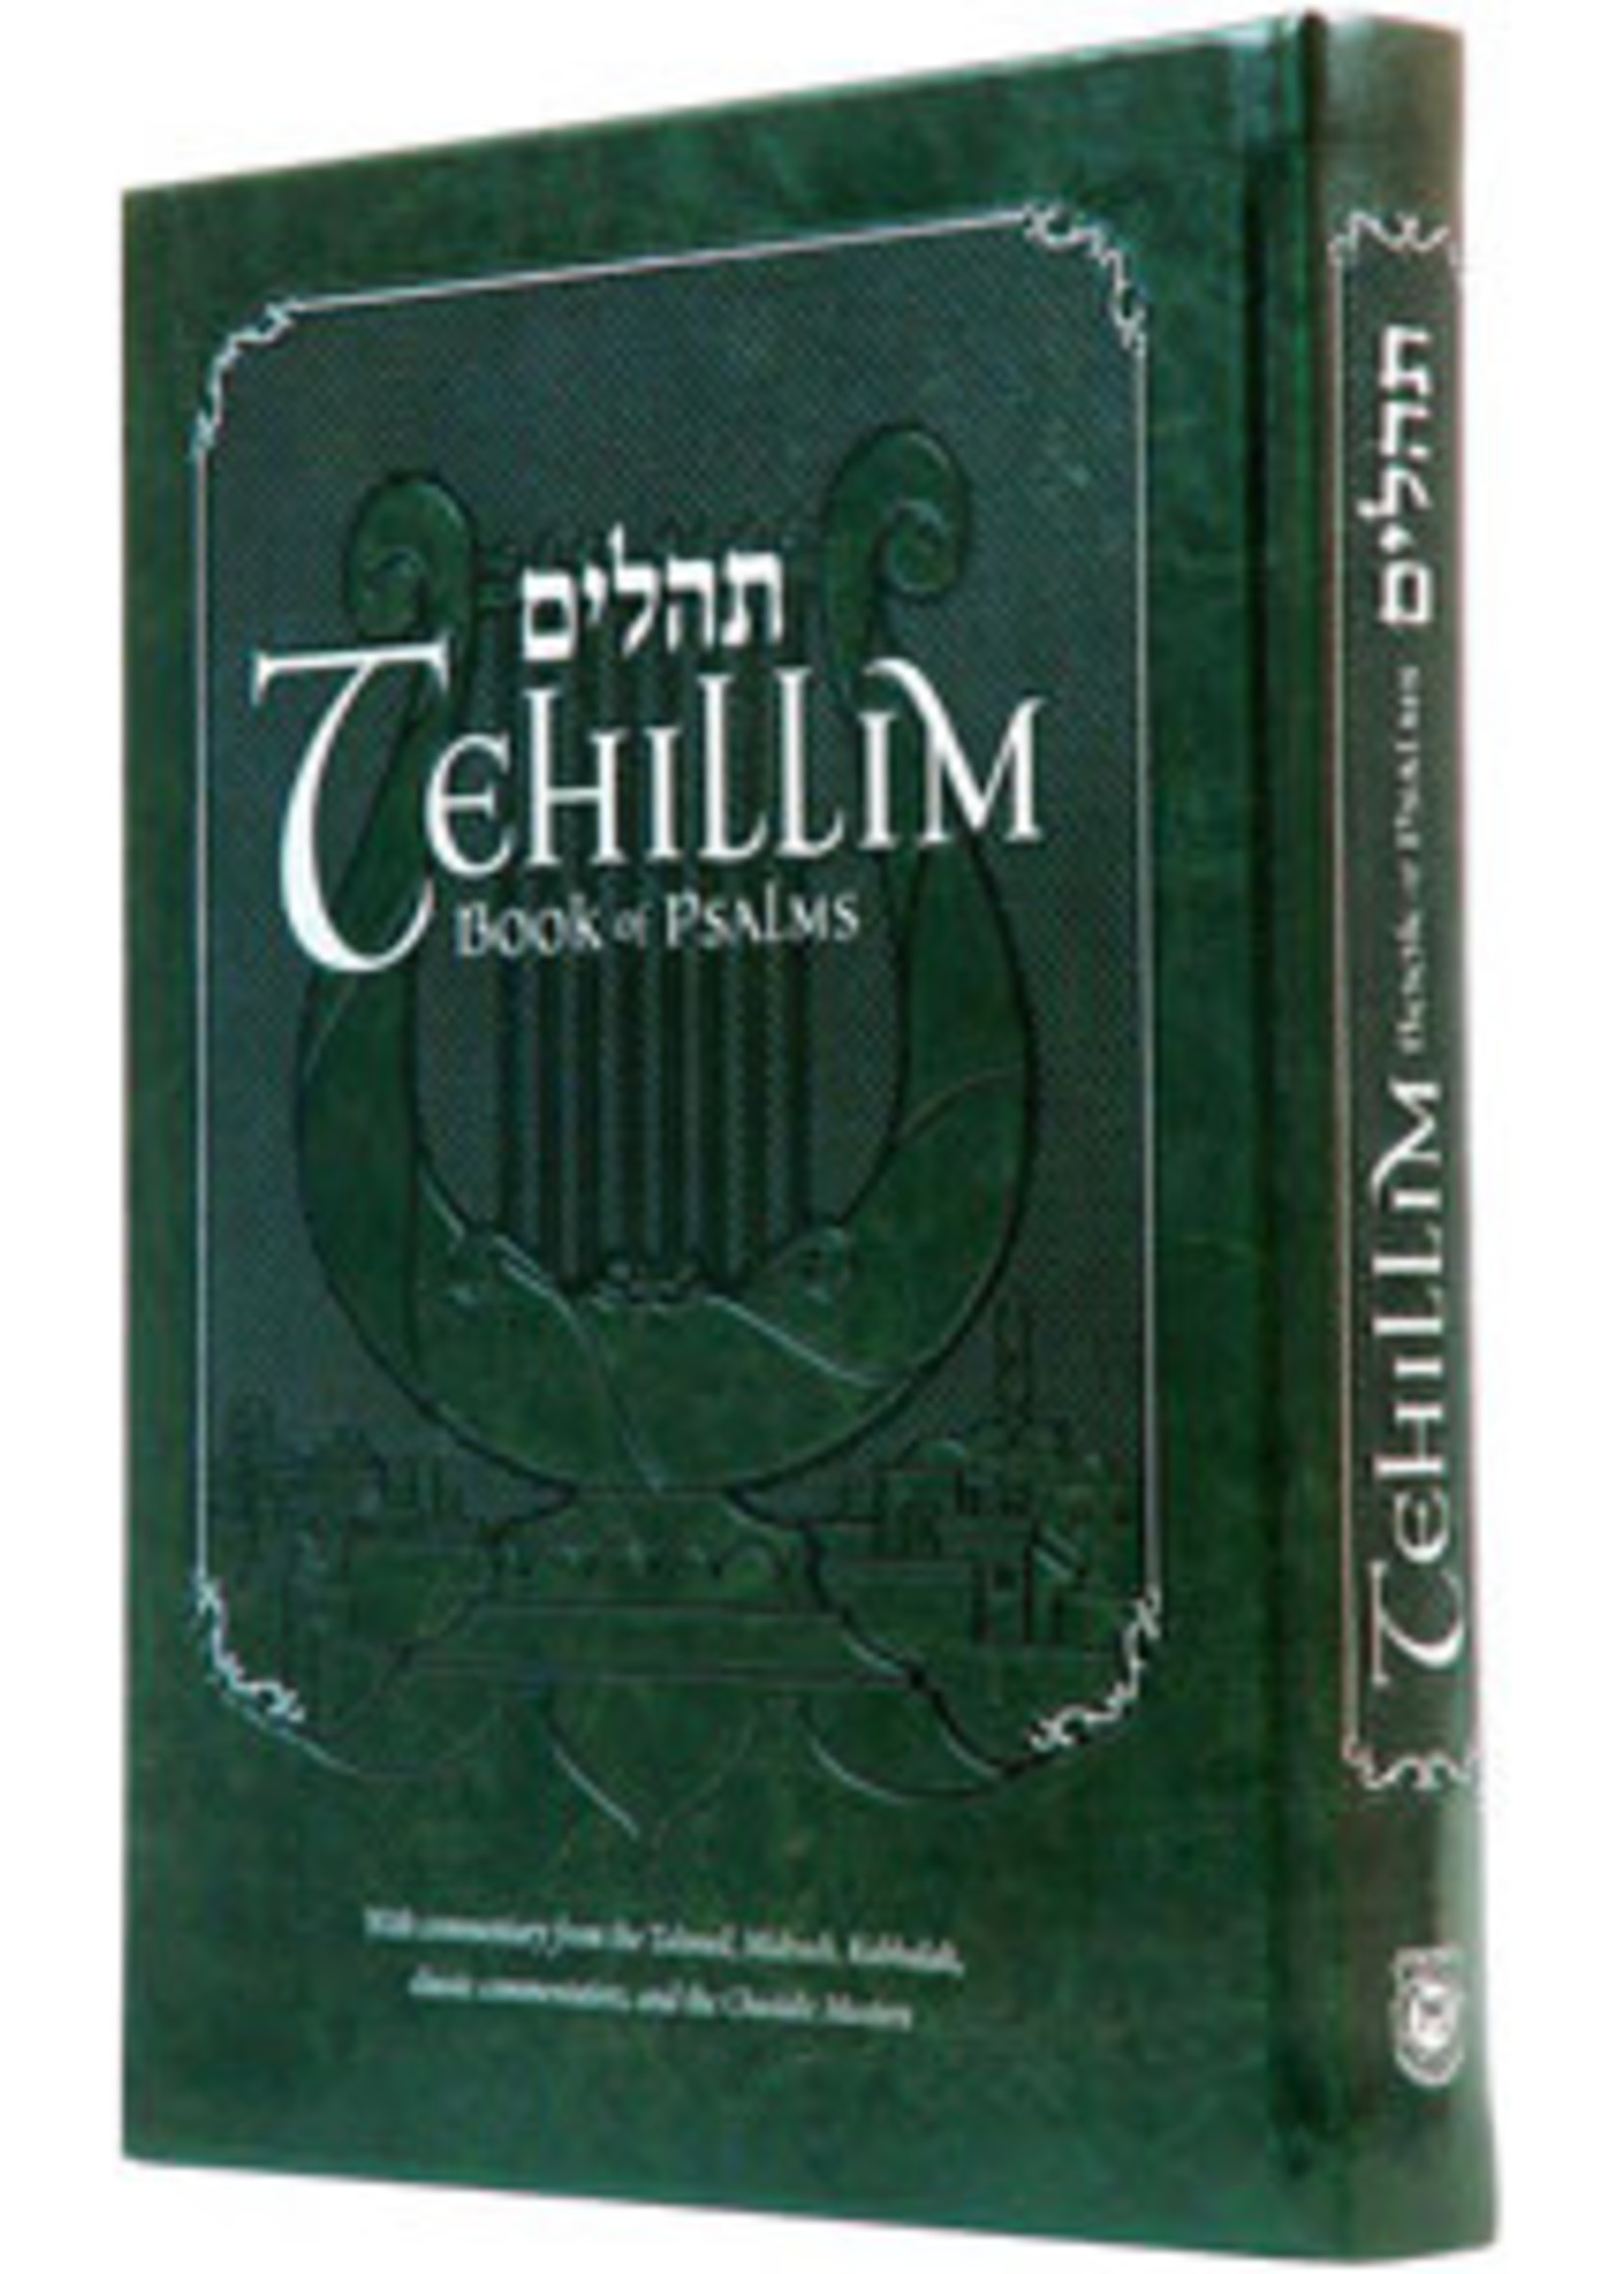 TEHILLIM BOOK OF PSALMS DELUXE